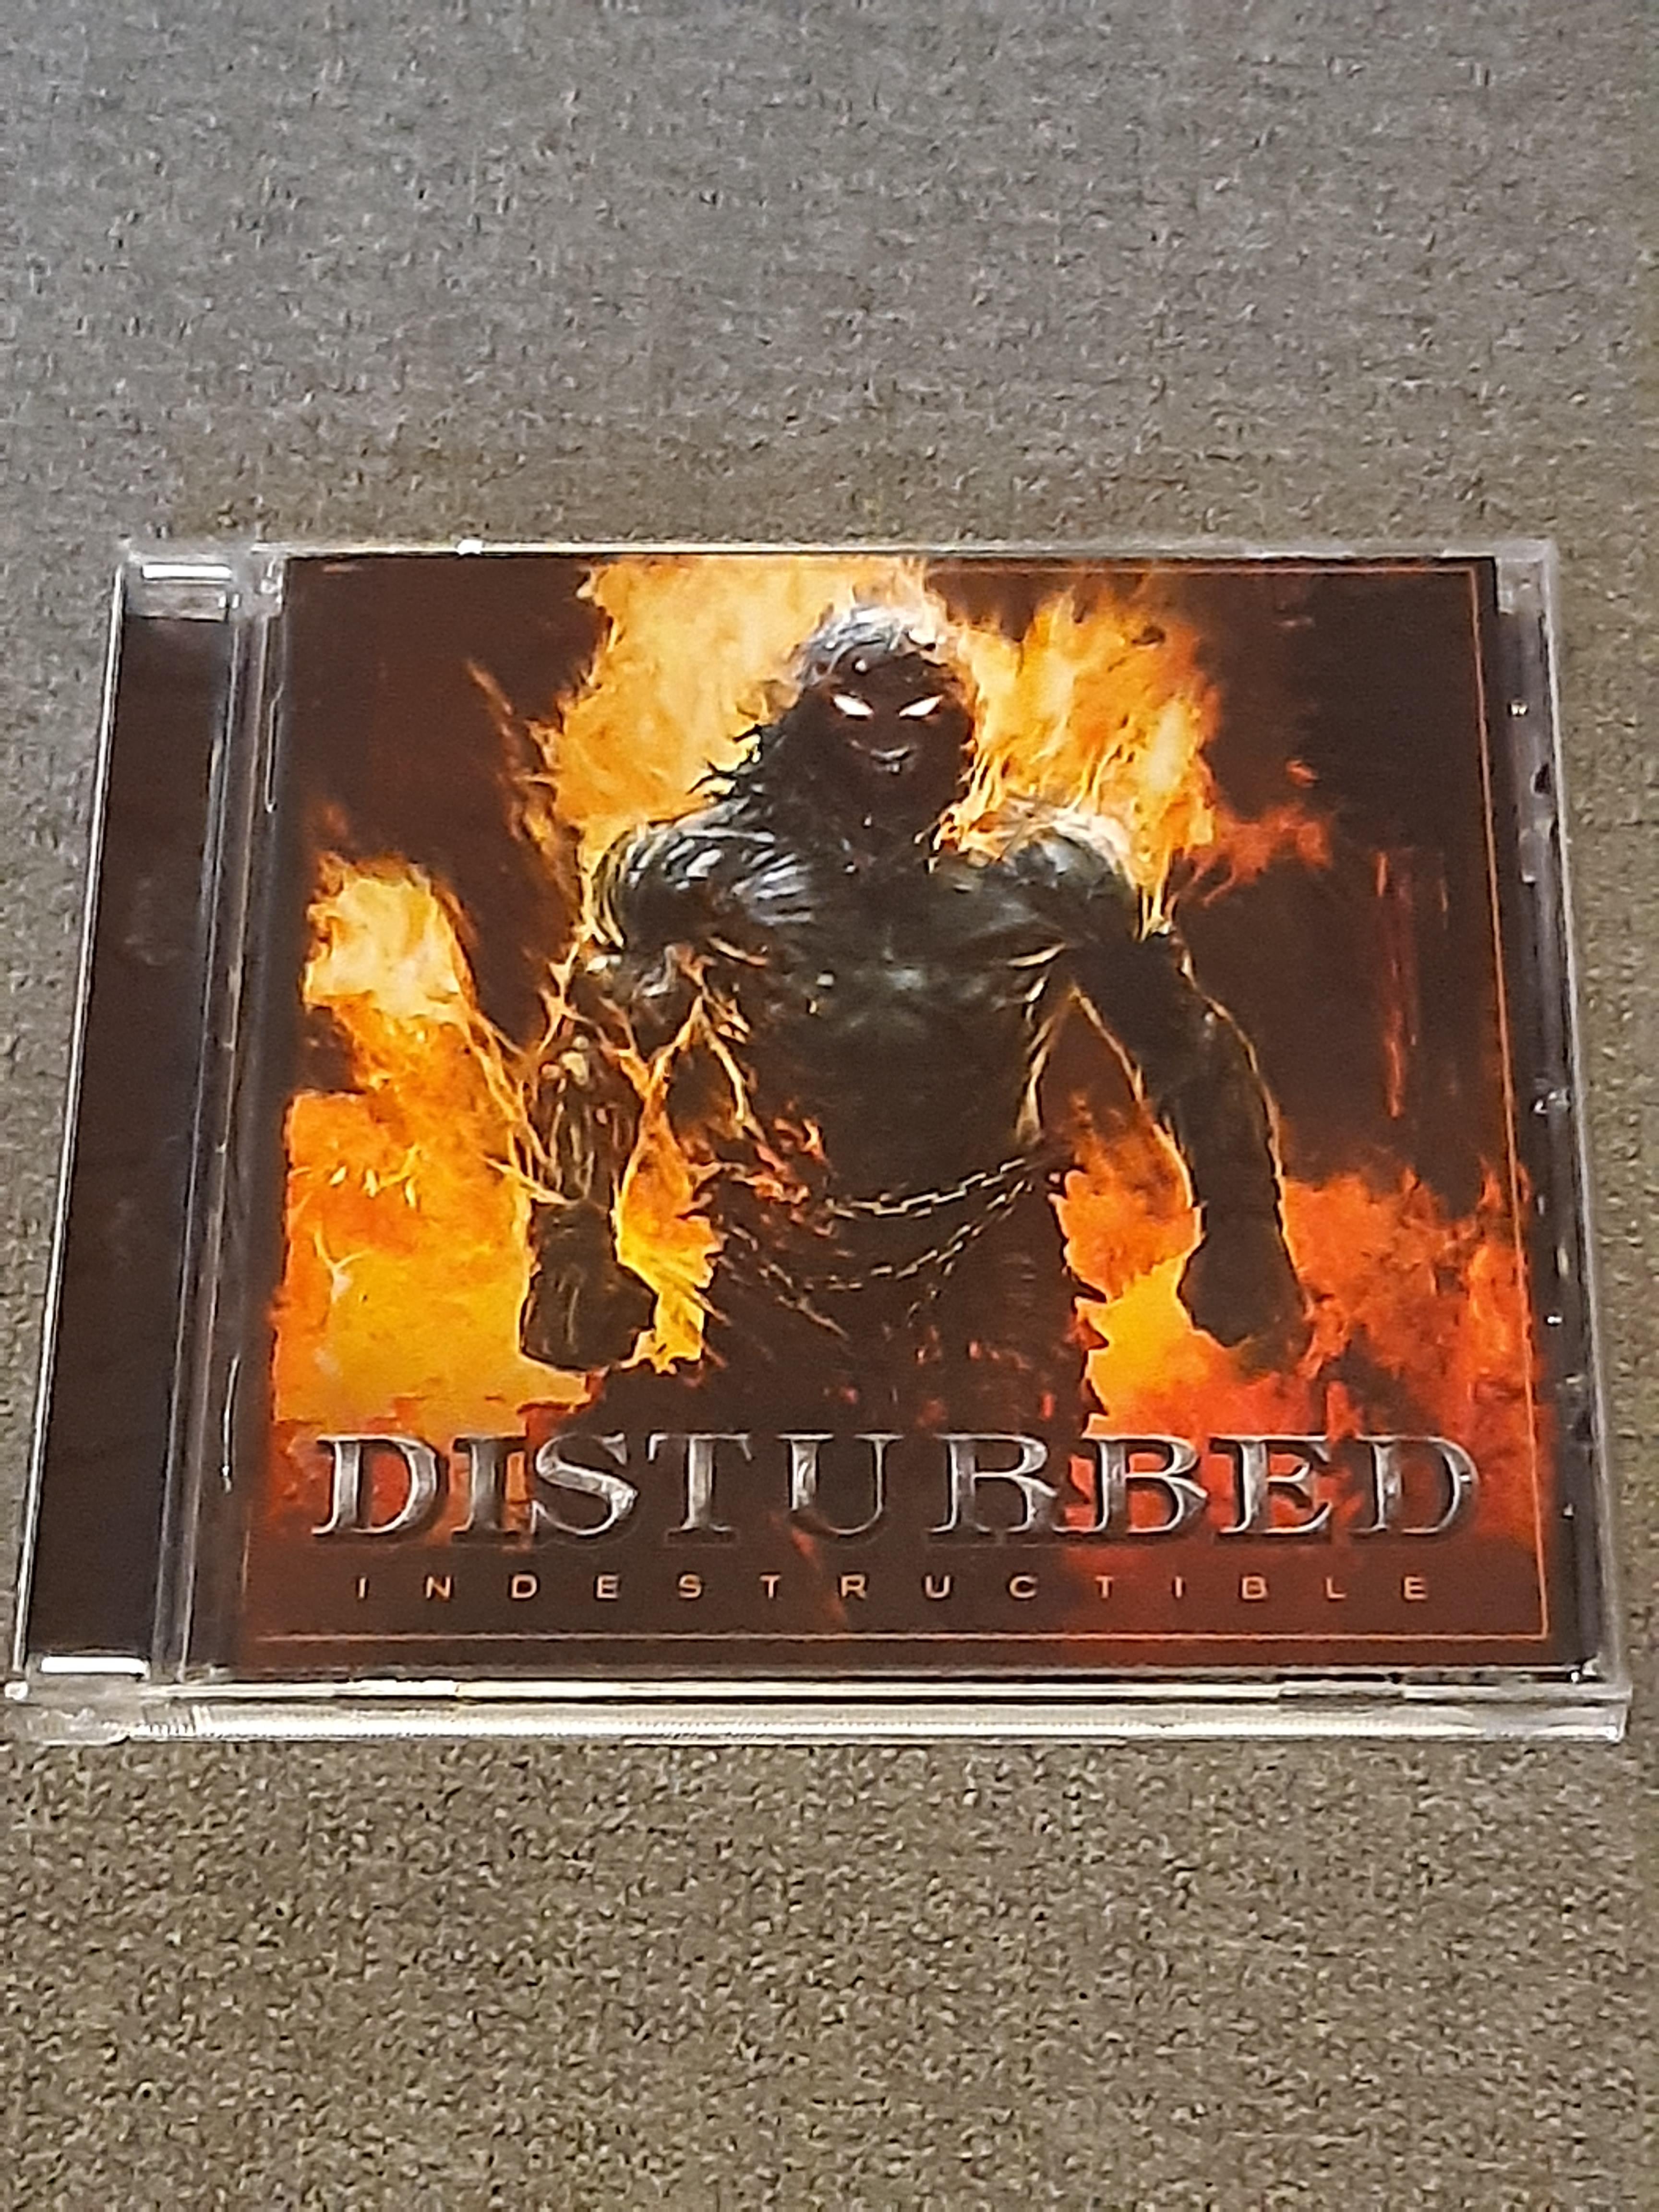 Disturbed - Indestructible - CD (käytetty)